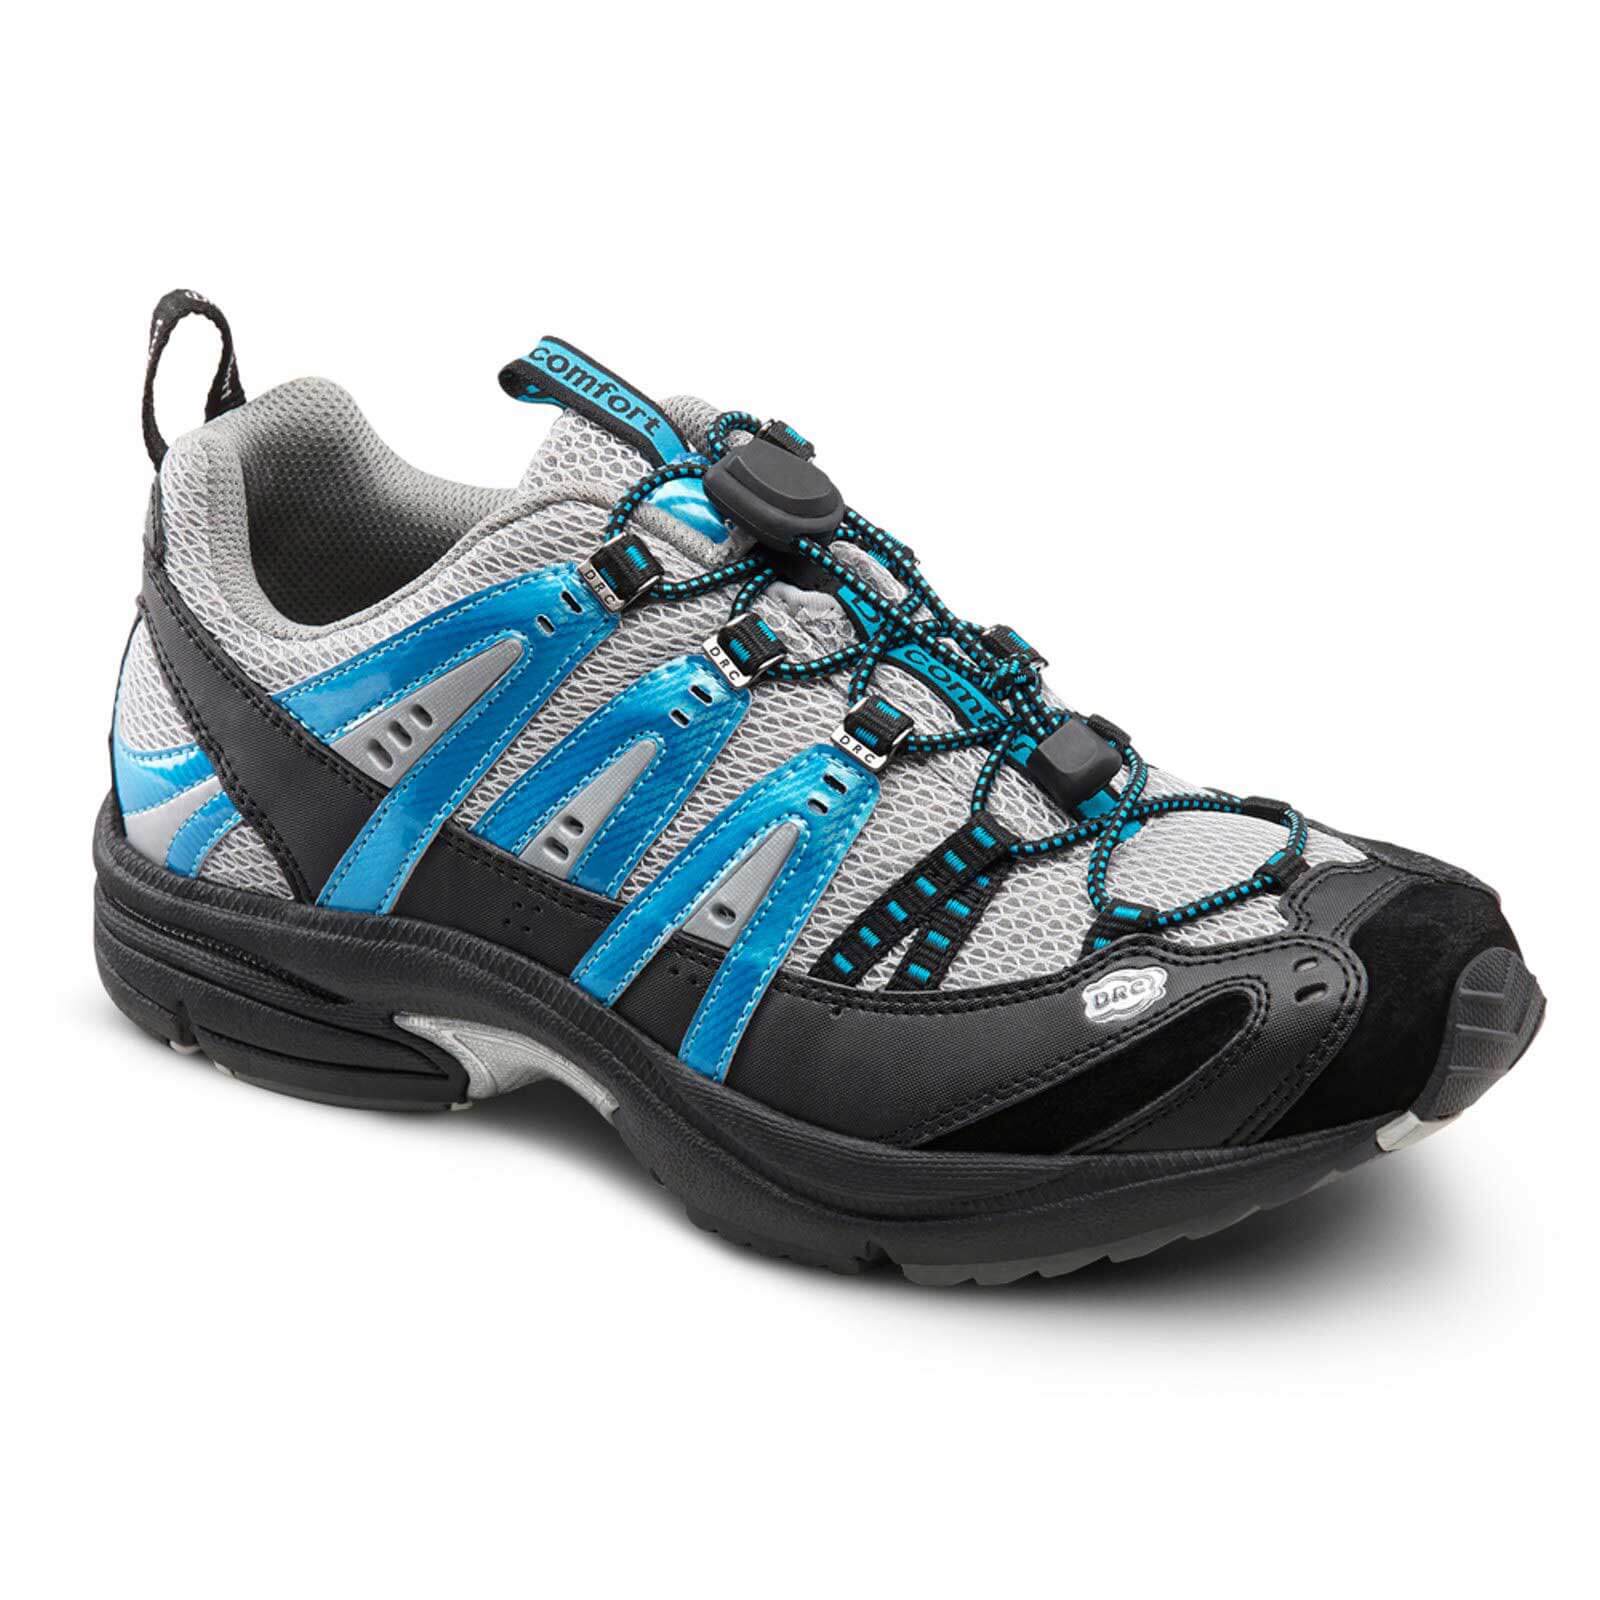 Dr. Comfort Performance Men's Athletic Shoe: 6 Medium (B/D) Metallic/Blue Elastic & Standard Laces - image 1 of 5